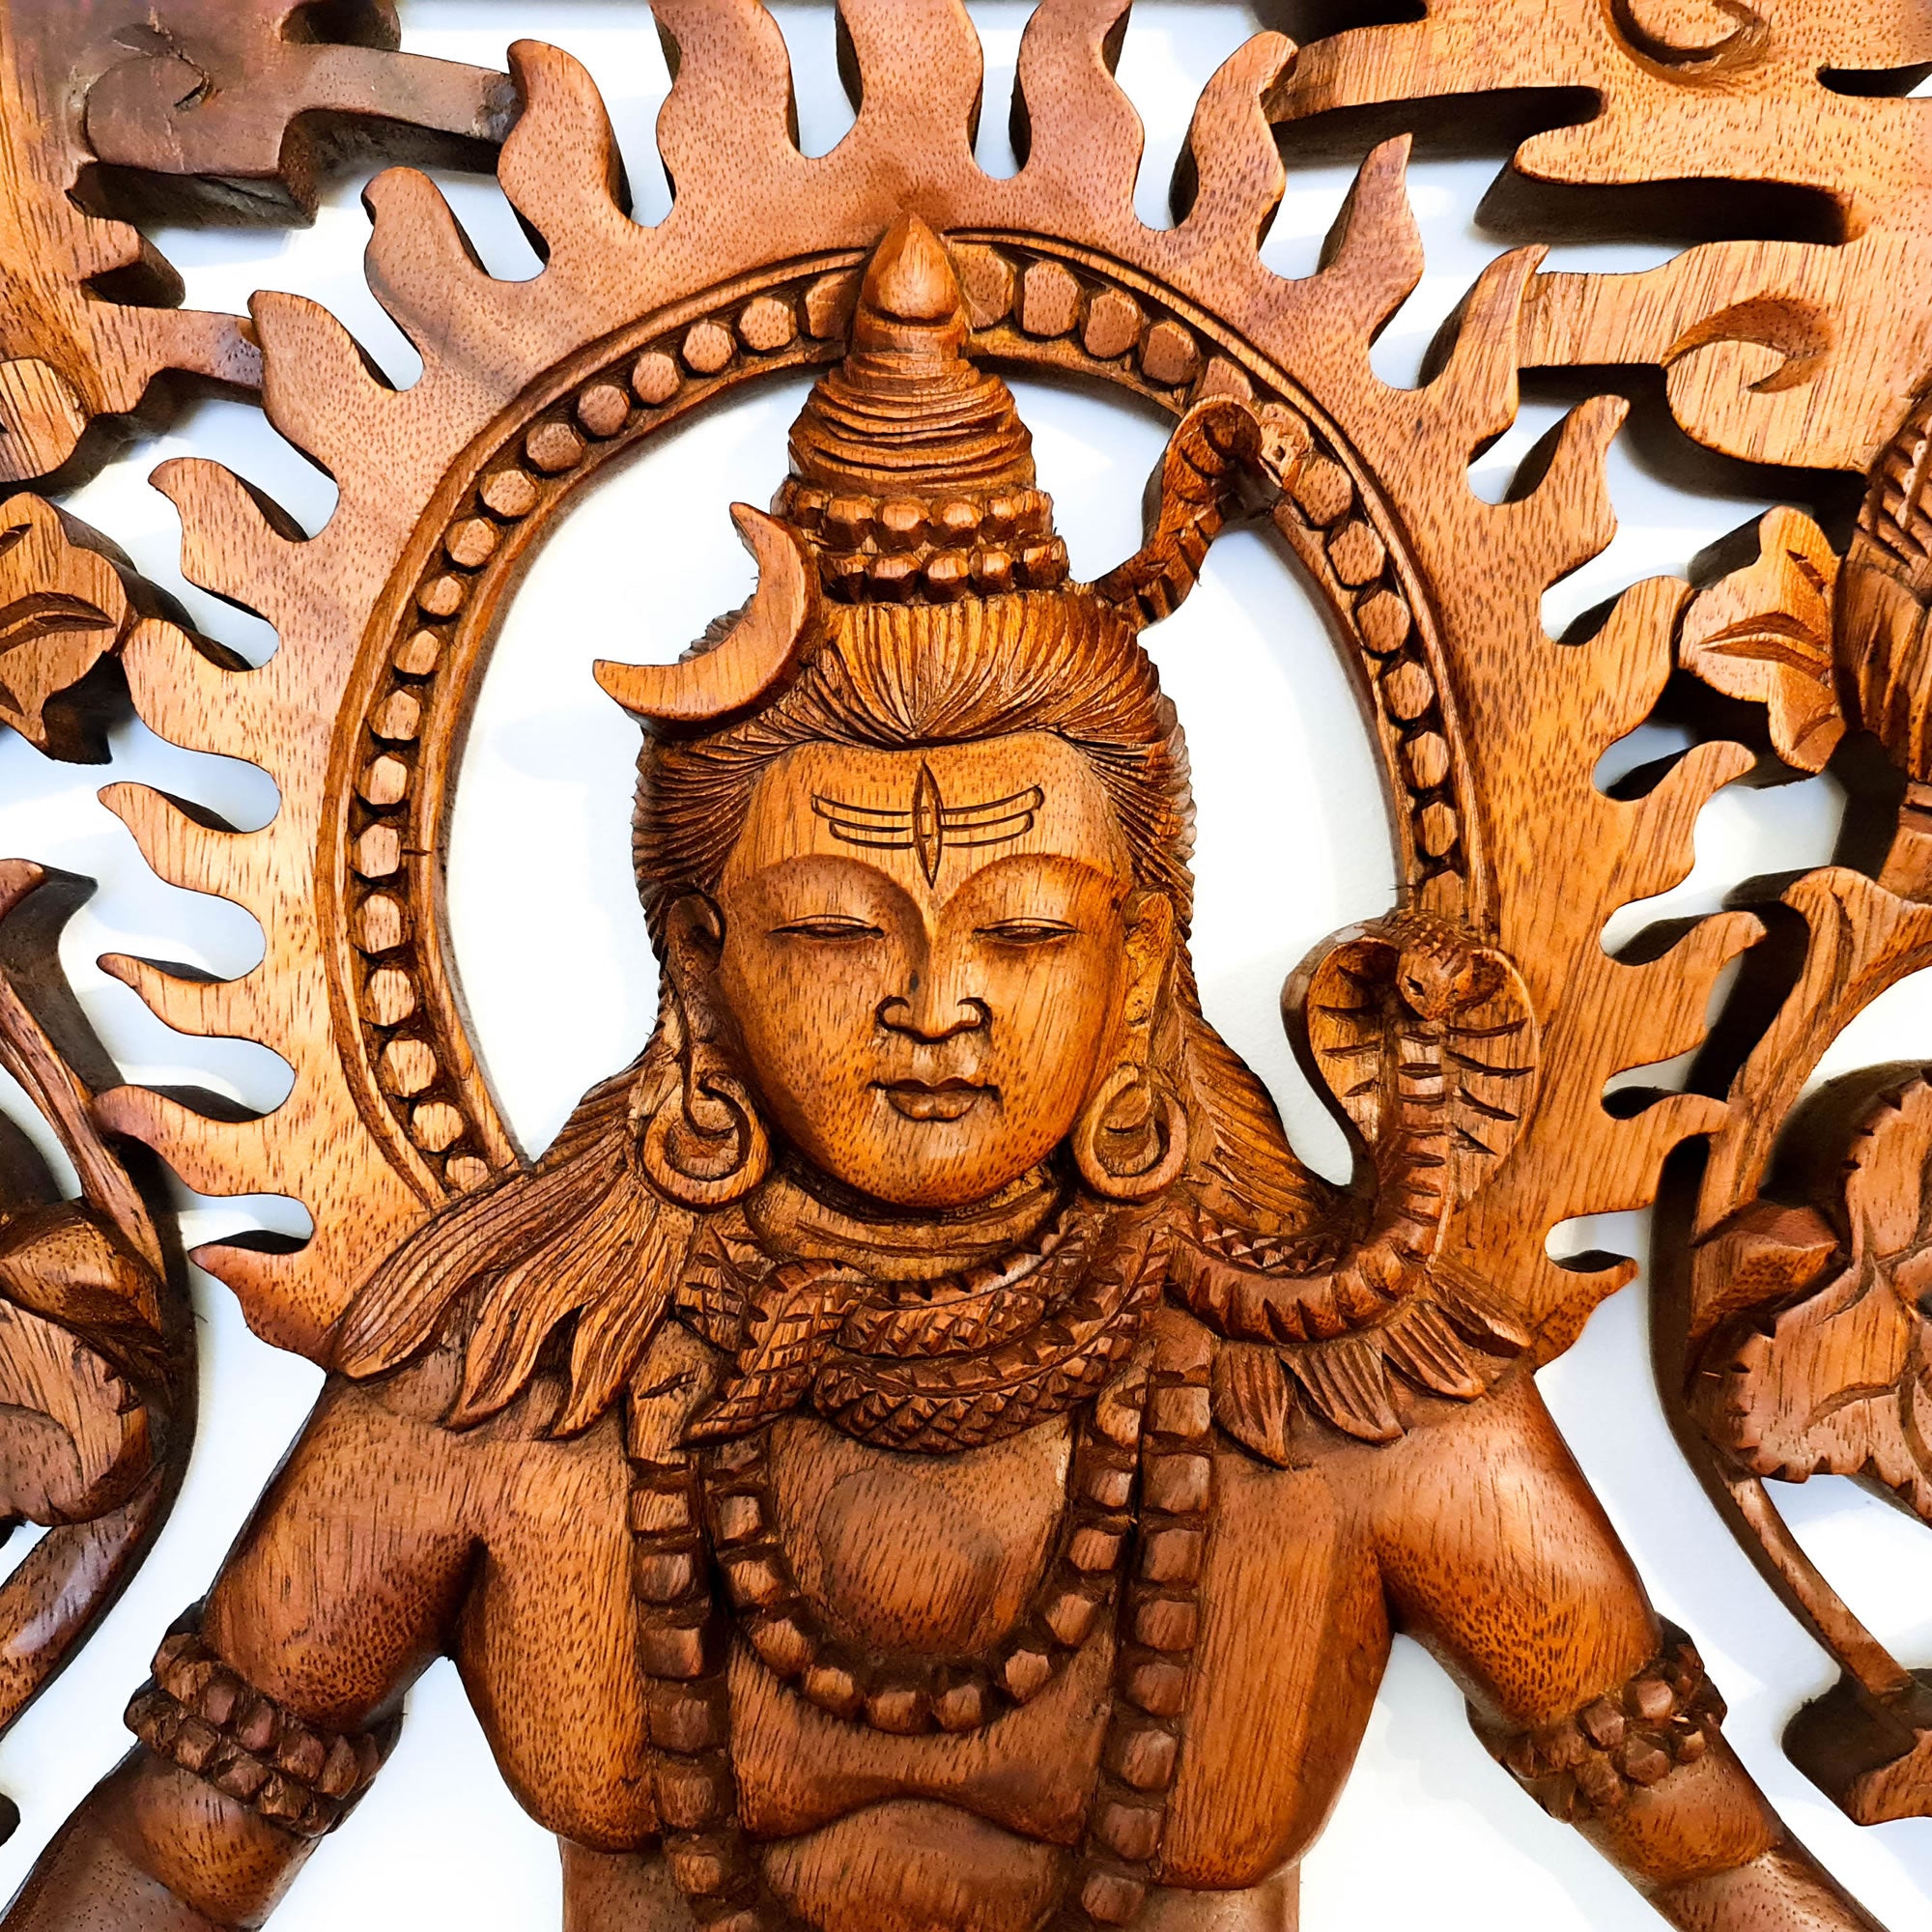 Lord Shiva Siva Carved Wooden Decorative Panel Sculpture Mandir Hindu Art Décor 